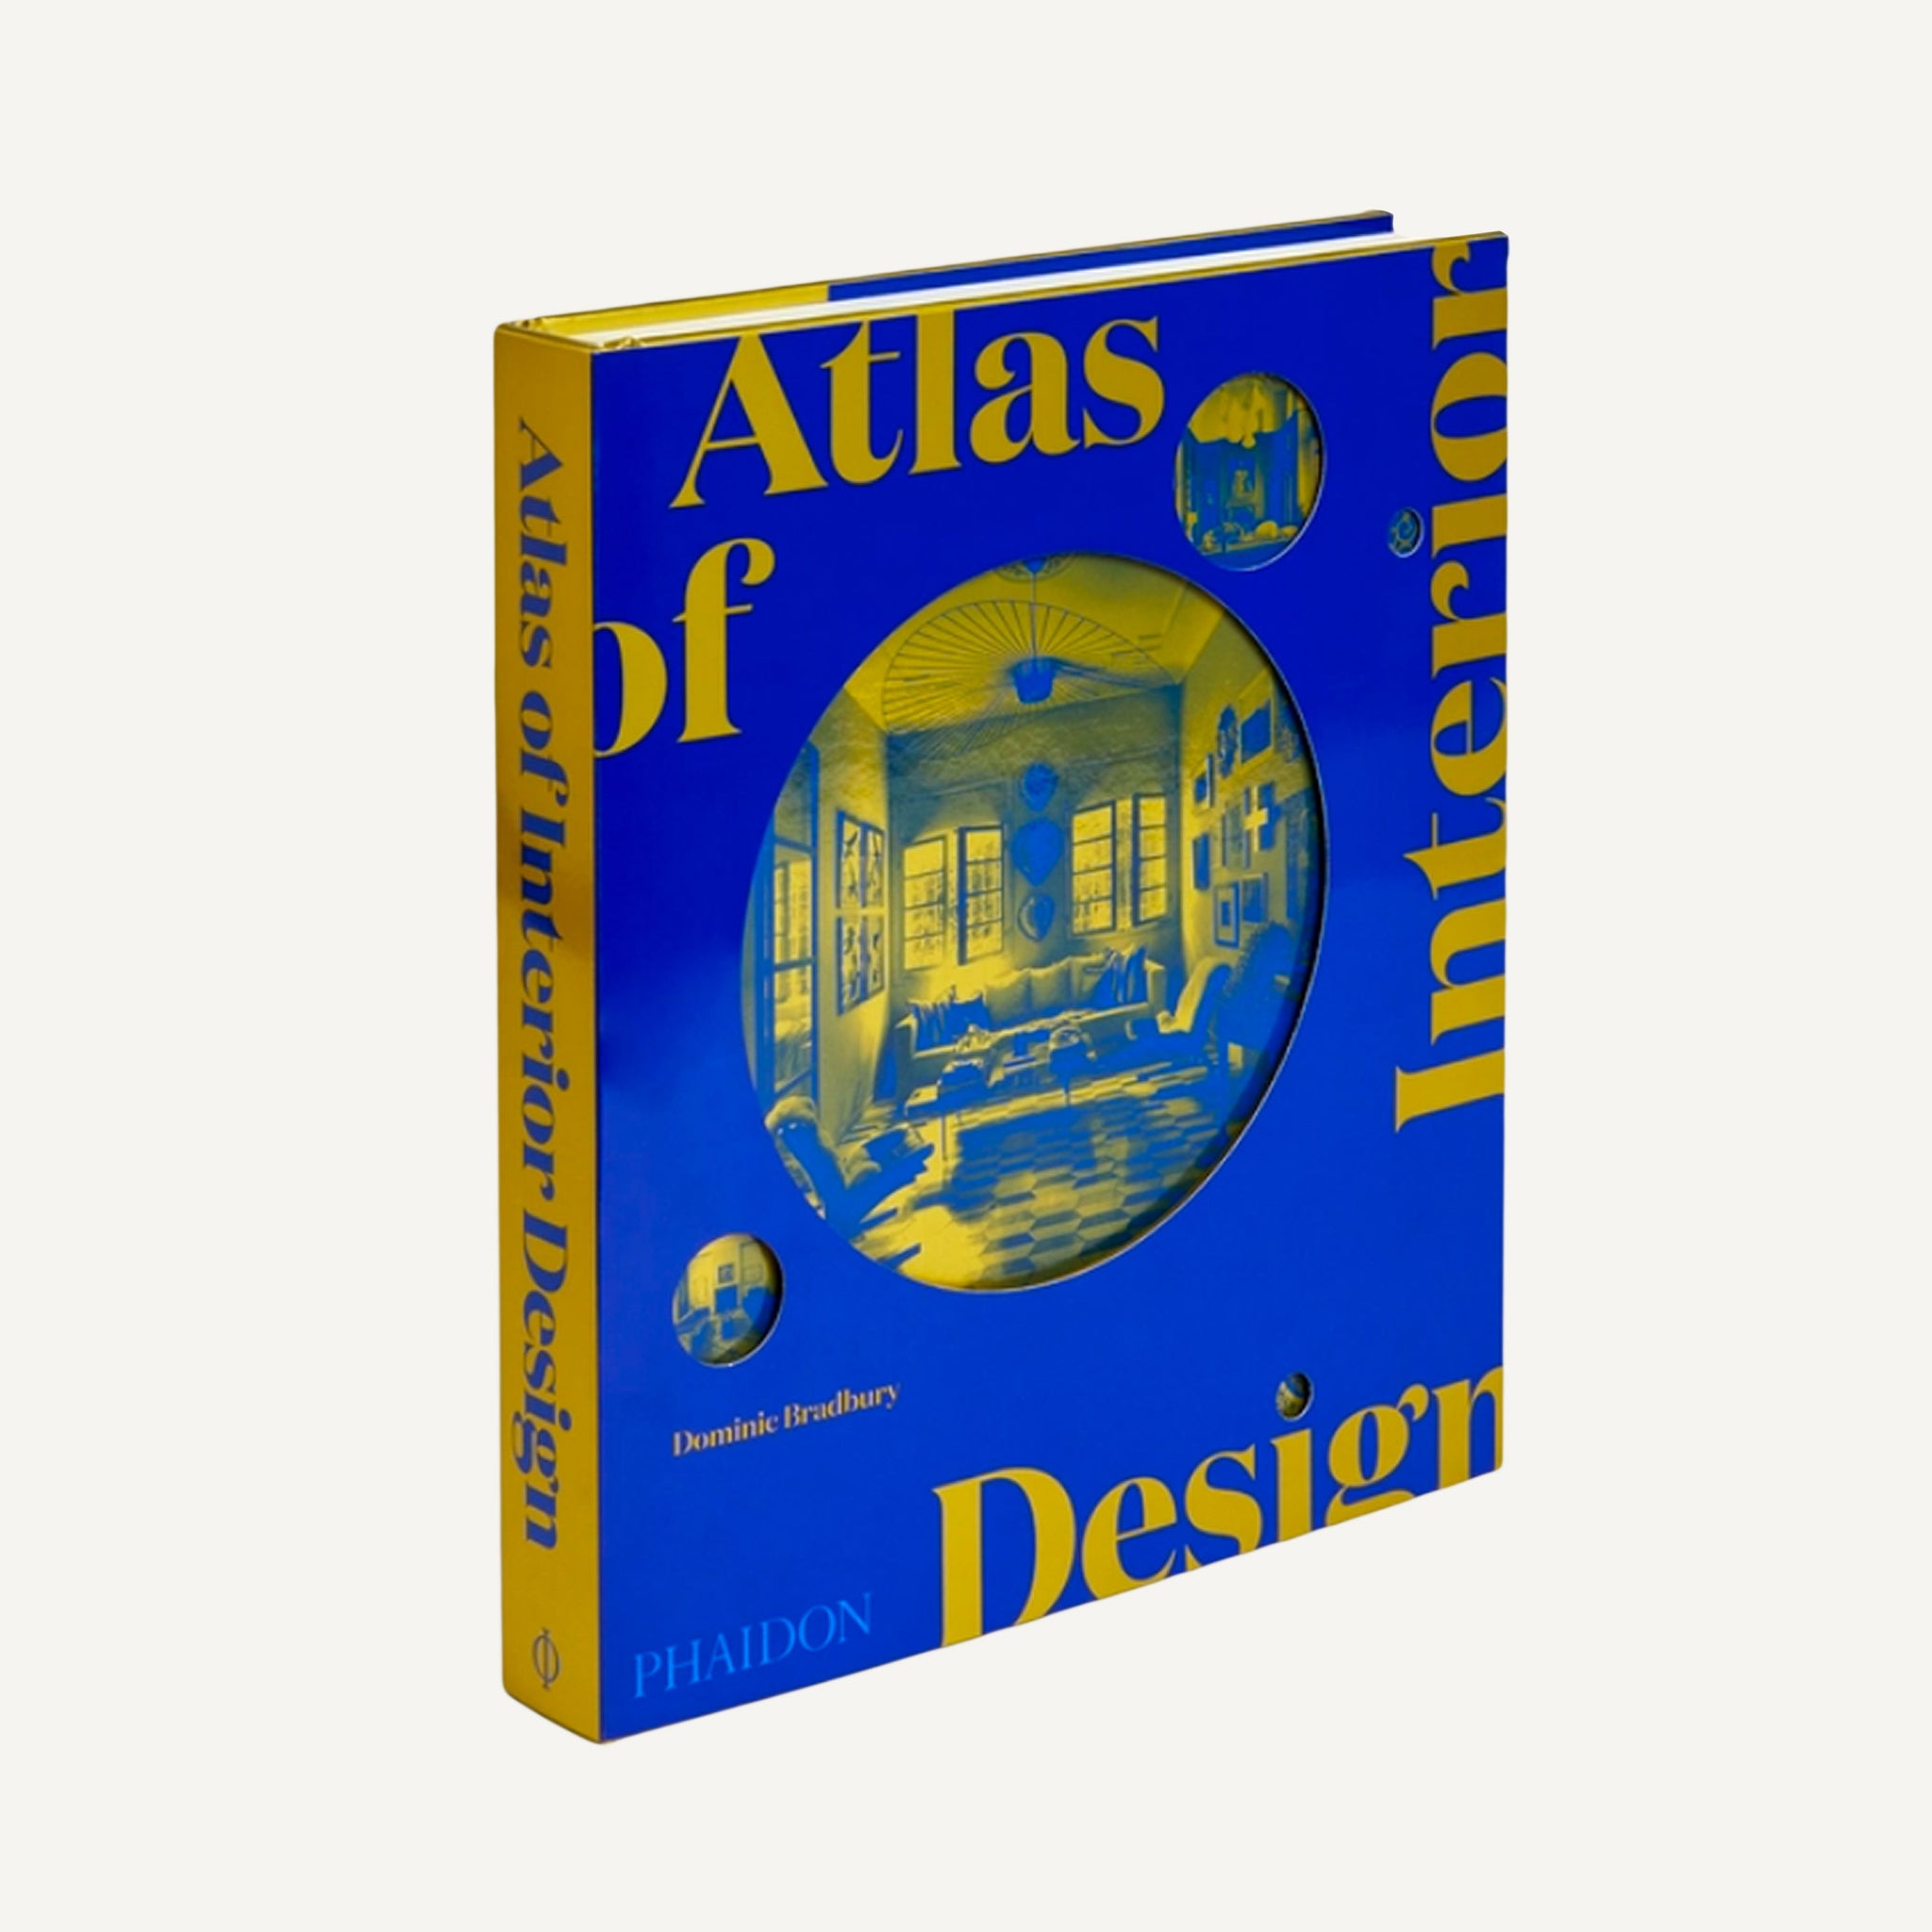 ATLAS OF INTERIOR DESIGN: DOMINIC BRADBURY